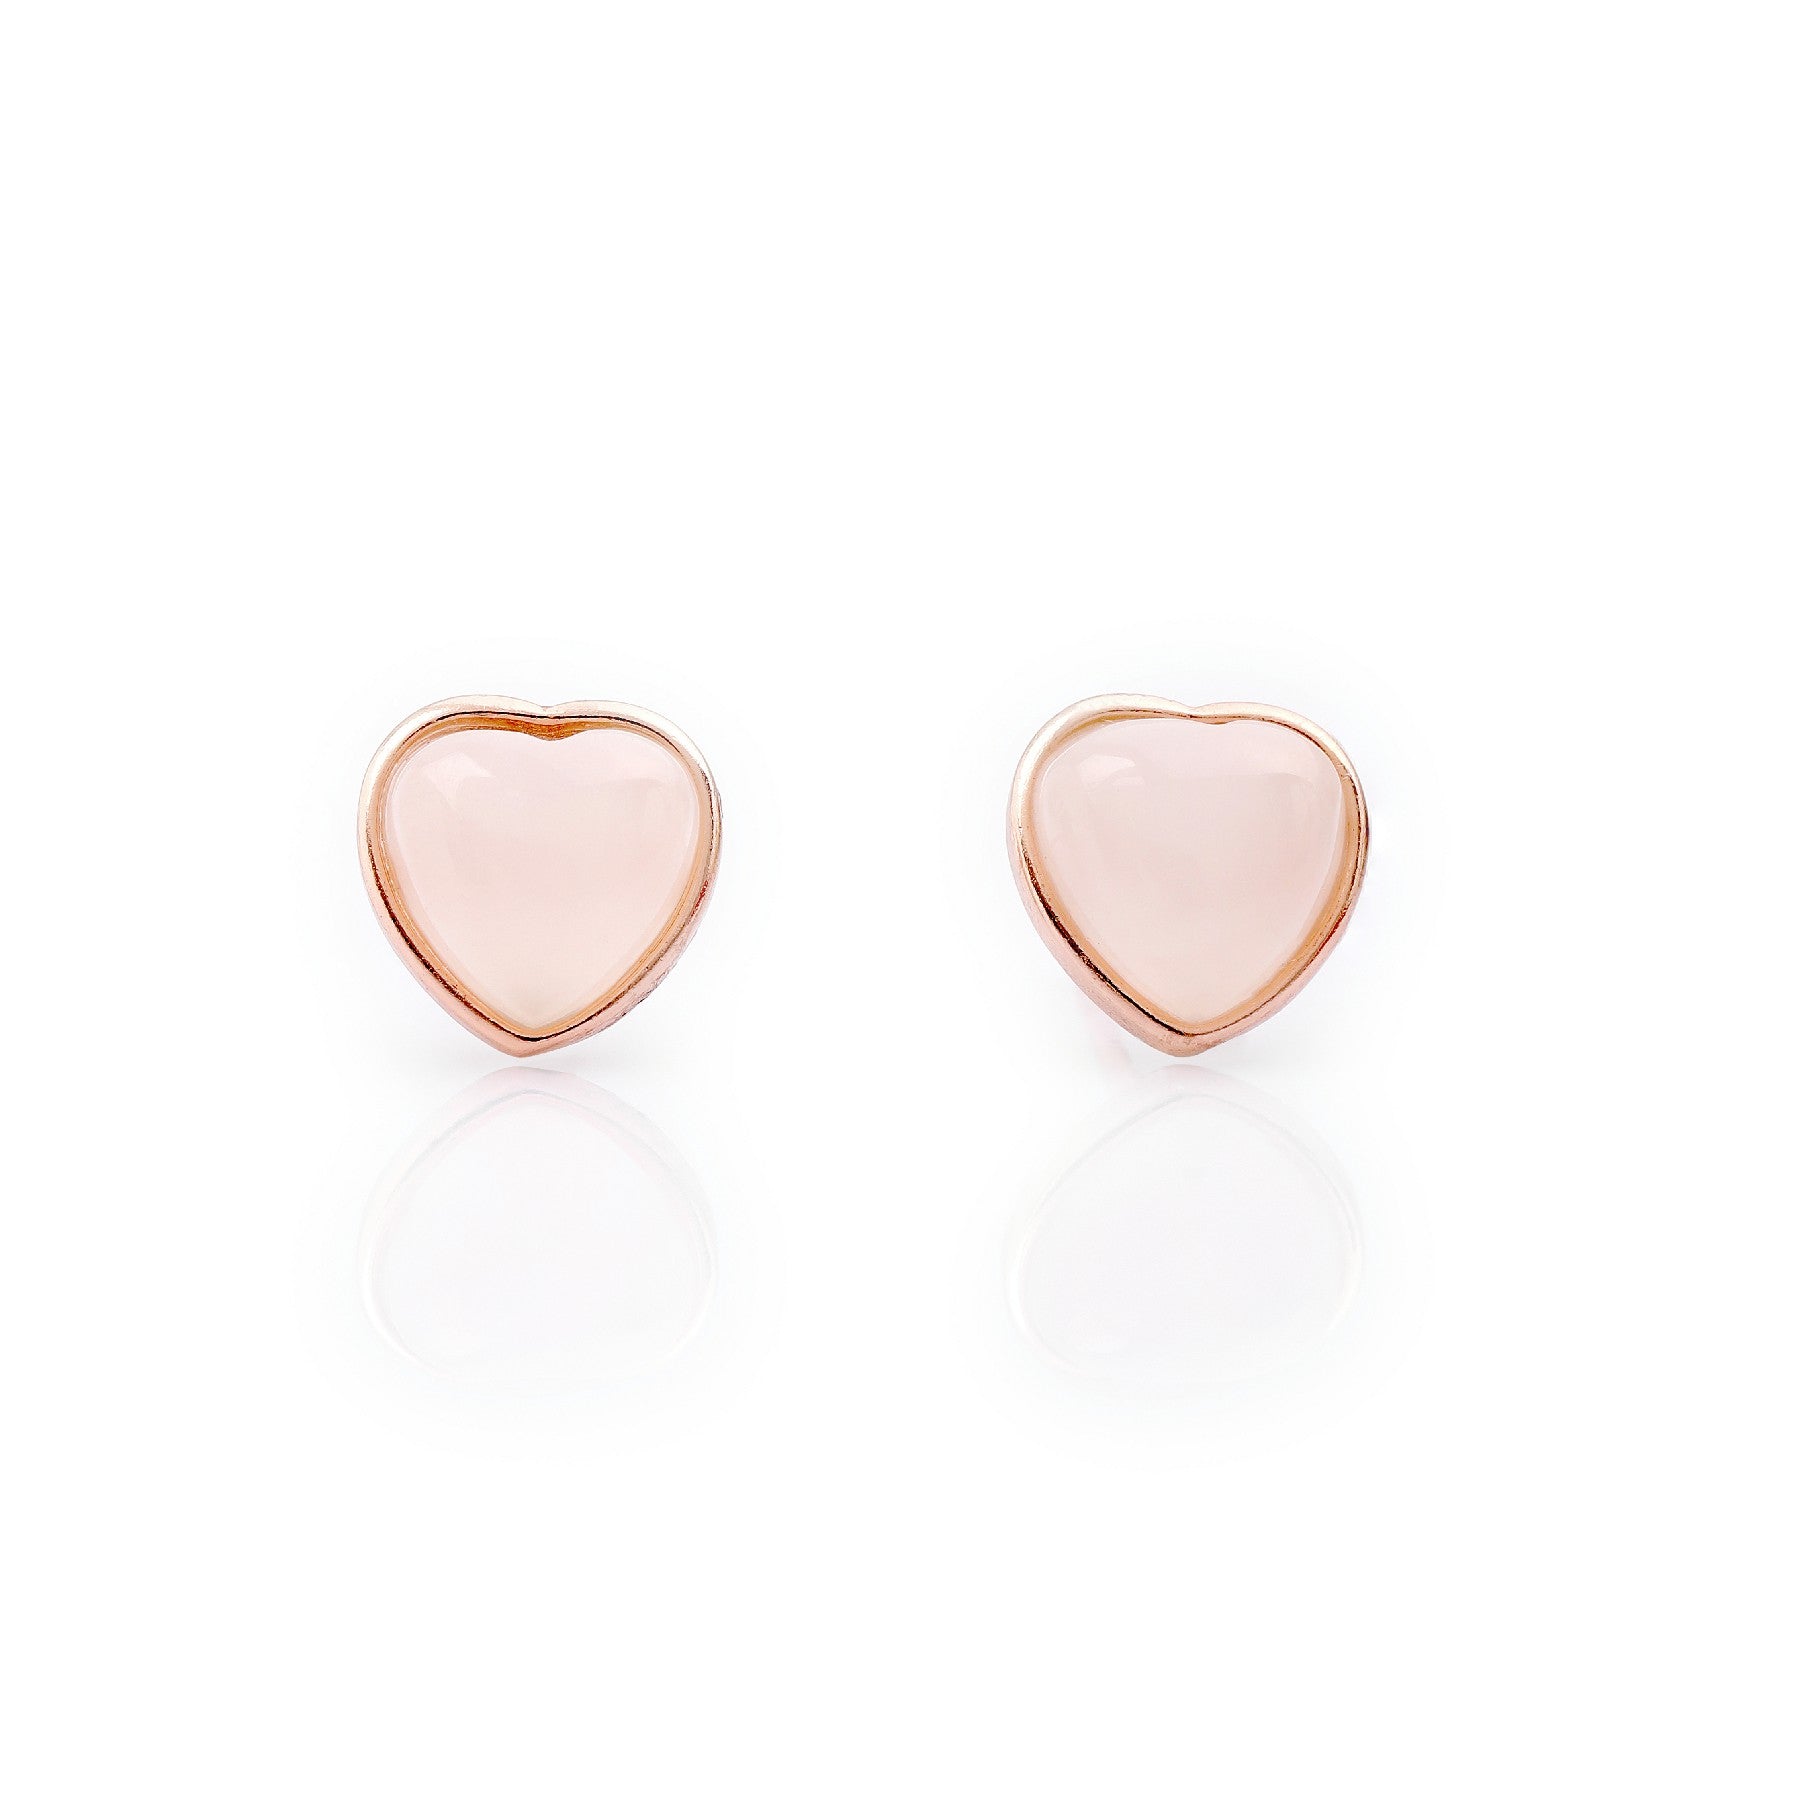 The heart shaped White Hetian Jade earrings